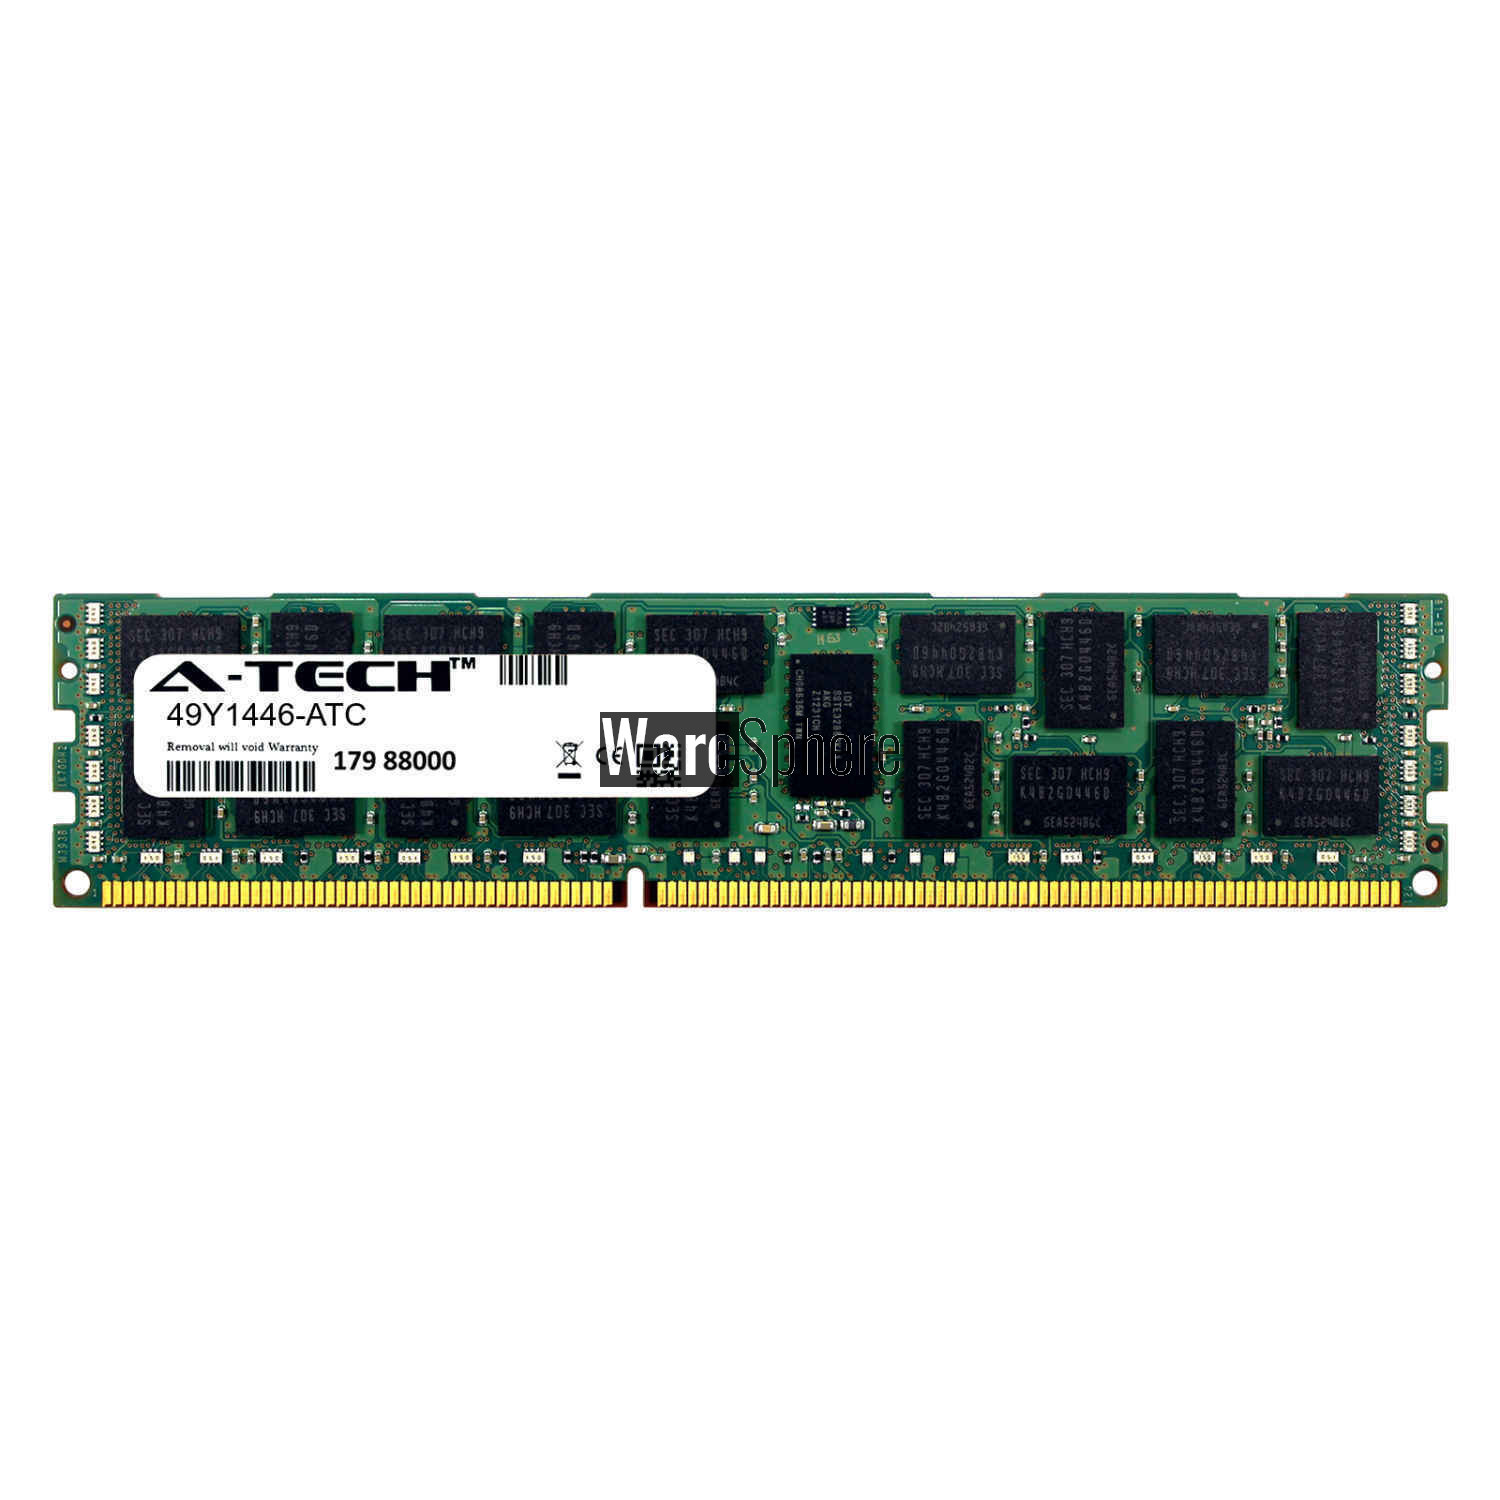 8GB DDR3 1333mhz PC3-10600R RAM Memory Card For Lenovo X3755 49Y1446